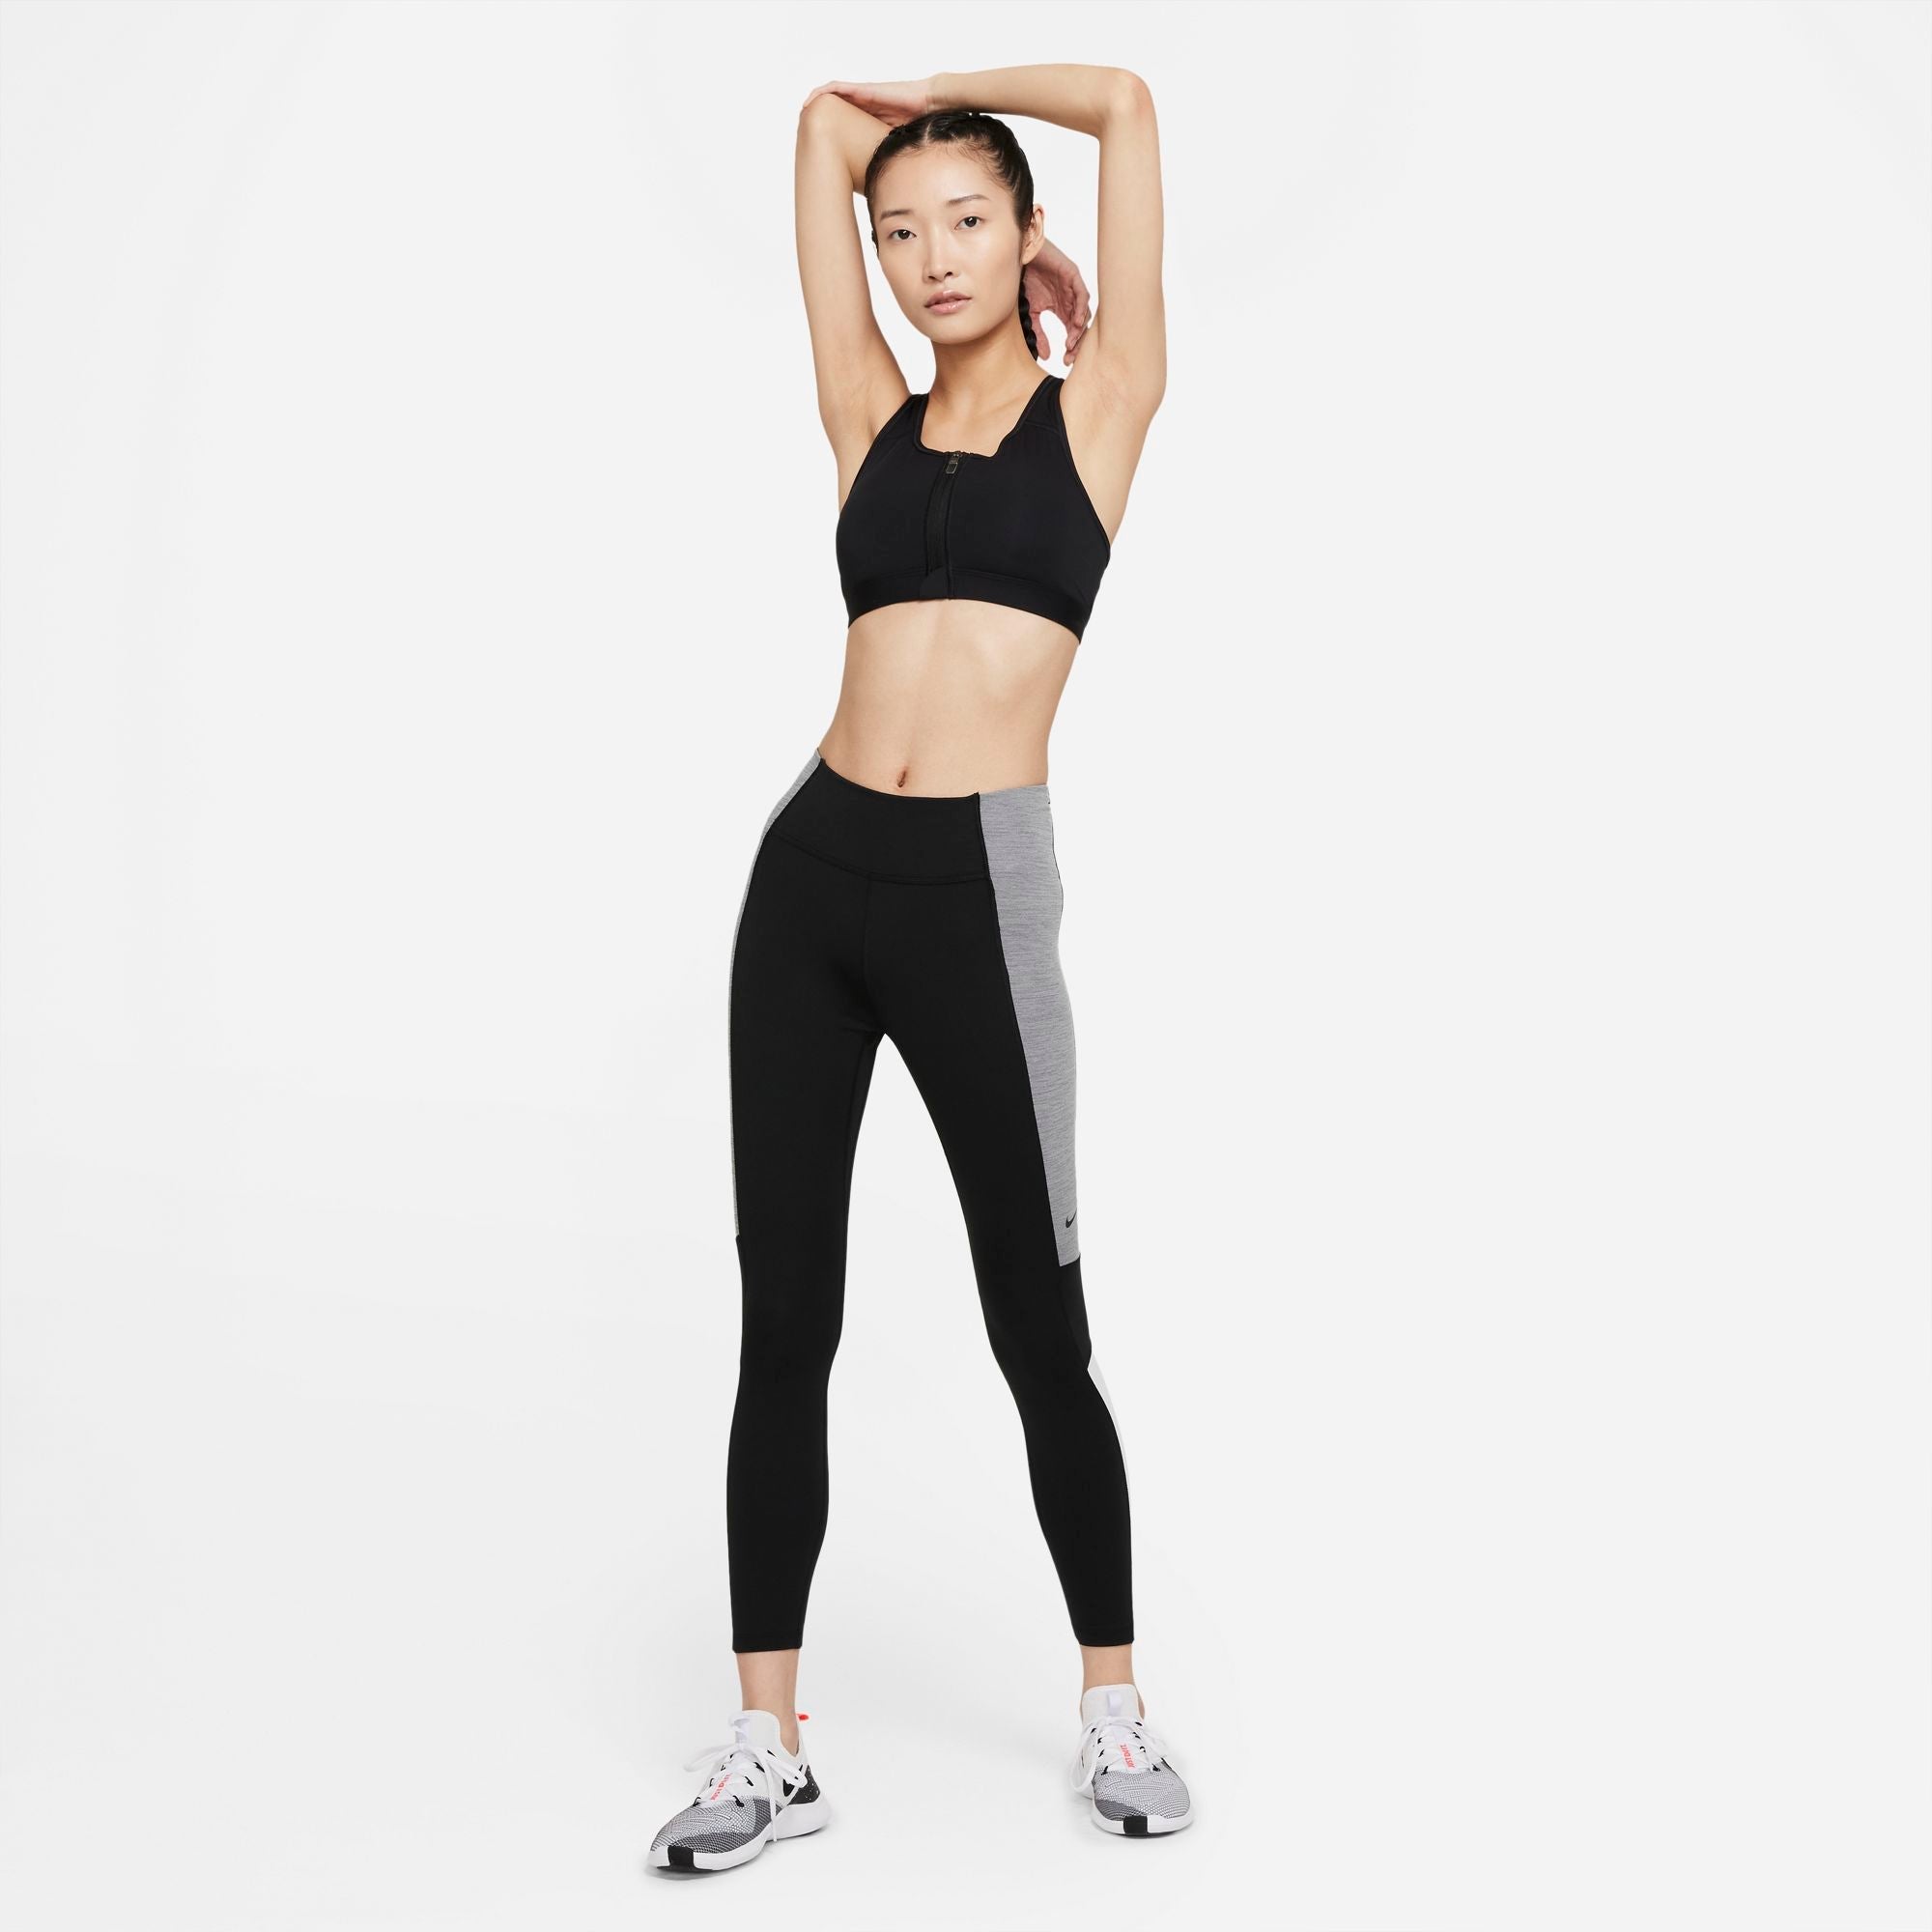 Nike Training Shape zip up bra in black